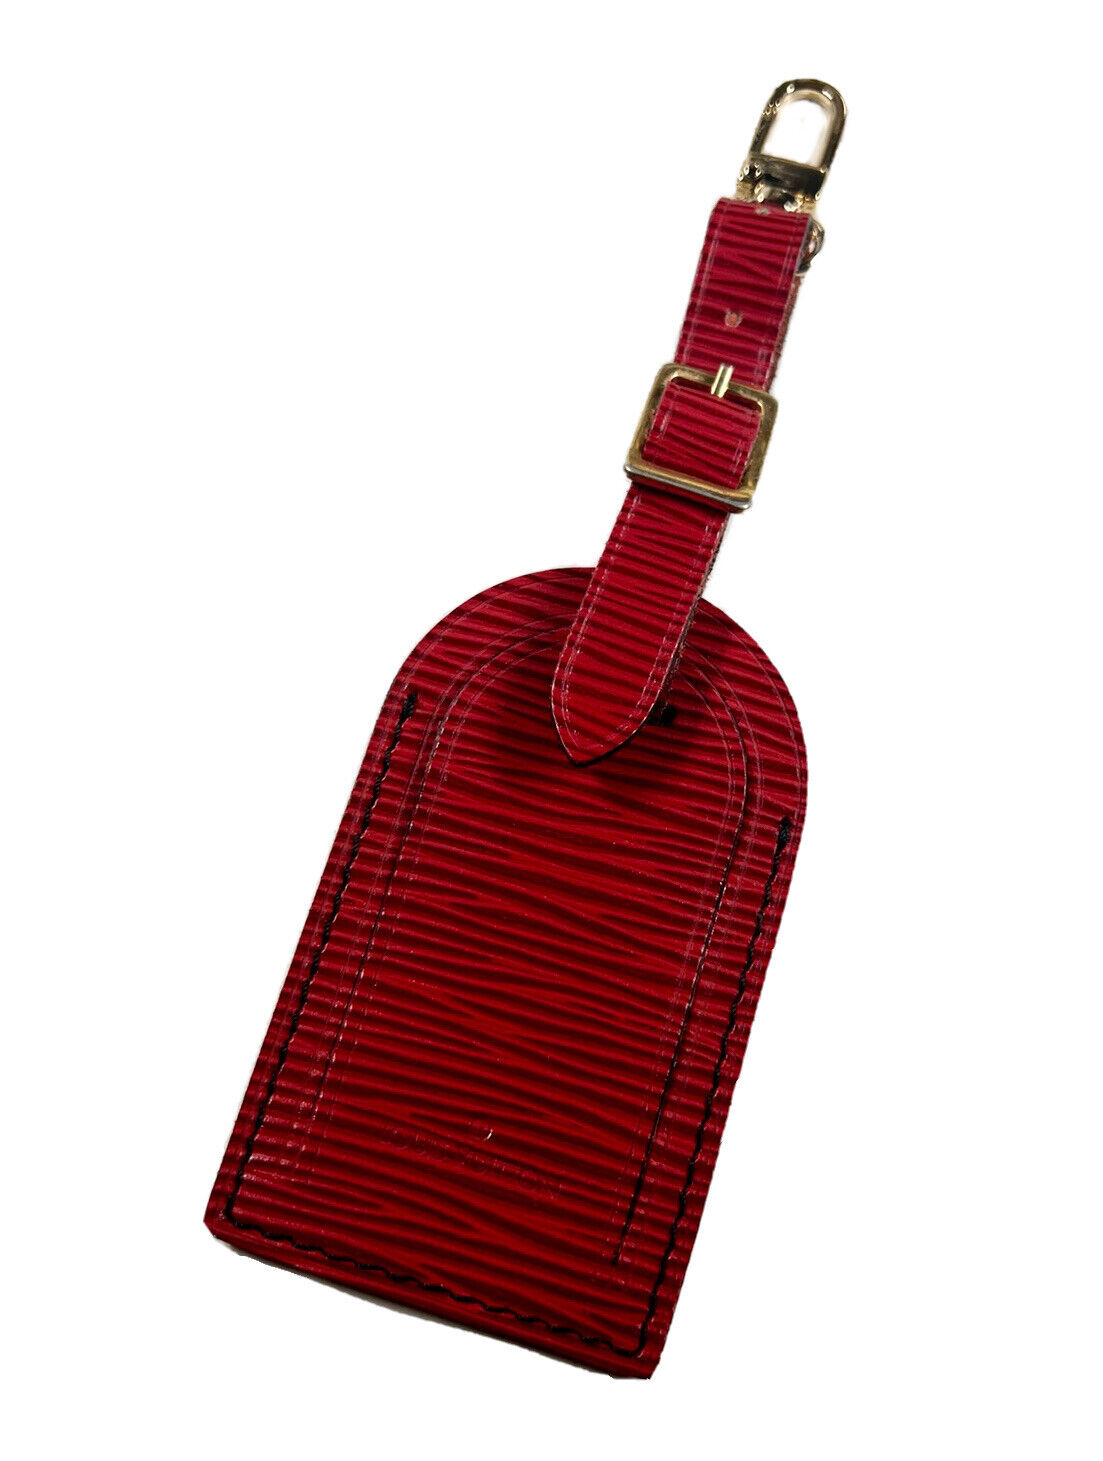 Louis Vuitton Rare Brown Leather Luggage Tag Bag Charm Speedy Keepall Epi  24lvs121